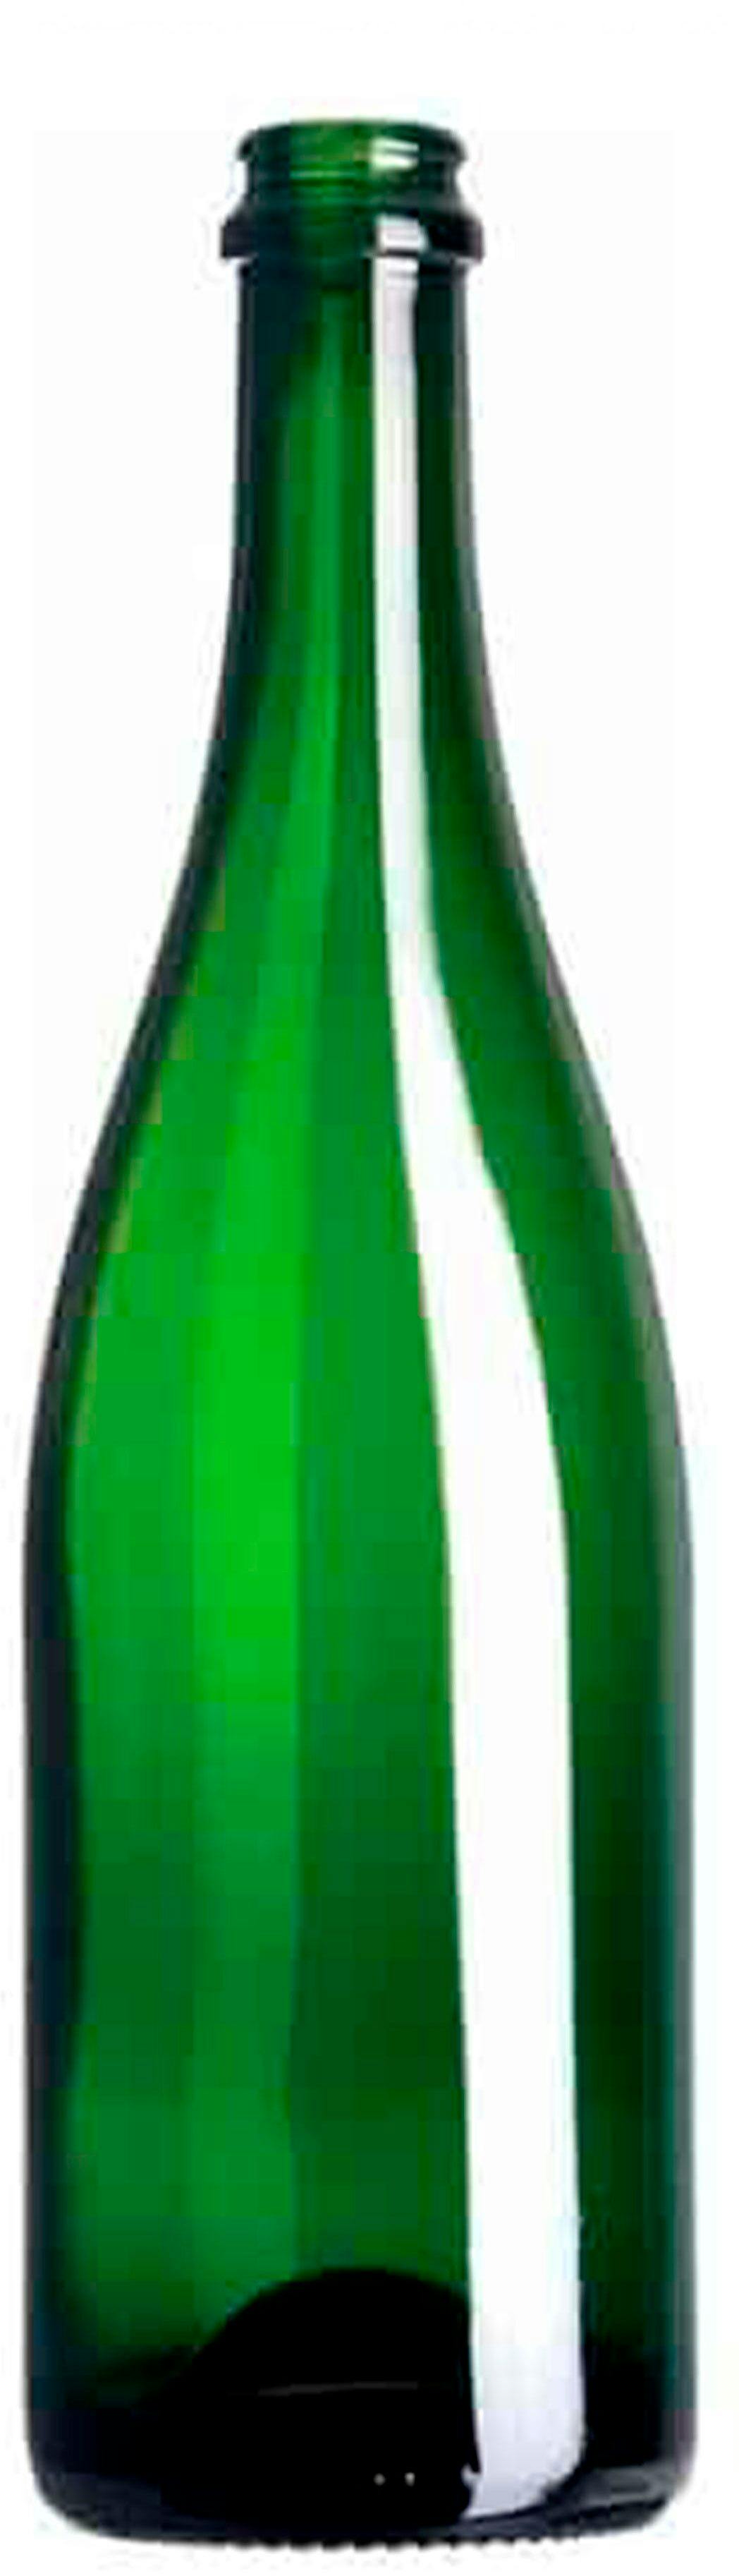 Bottiglia CREMANT  750 ml Corona 29 ExtraBaja - 18 mm